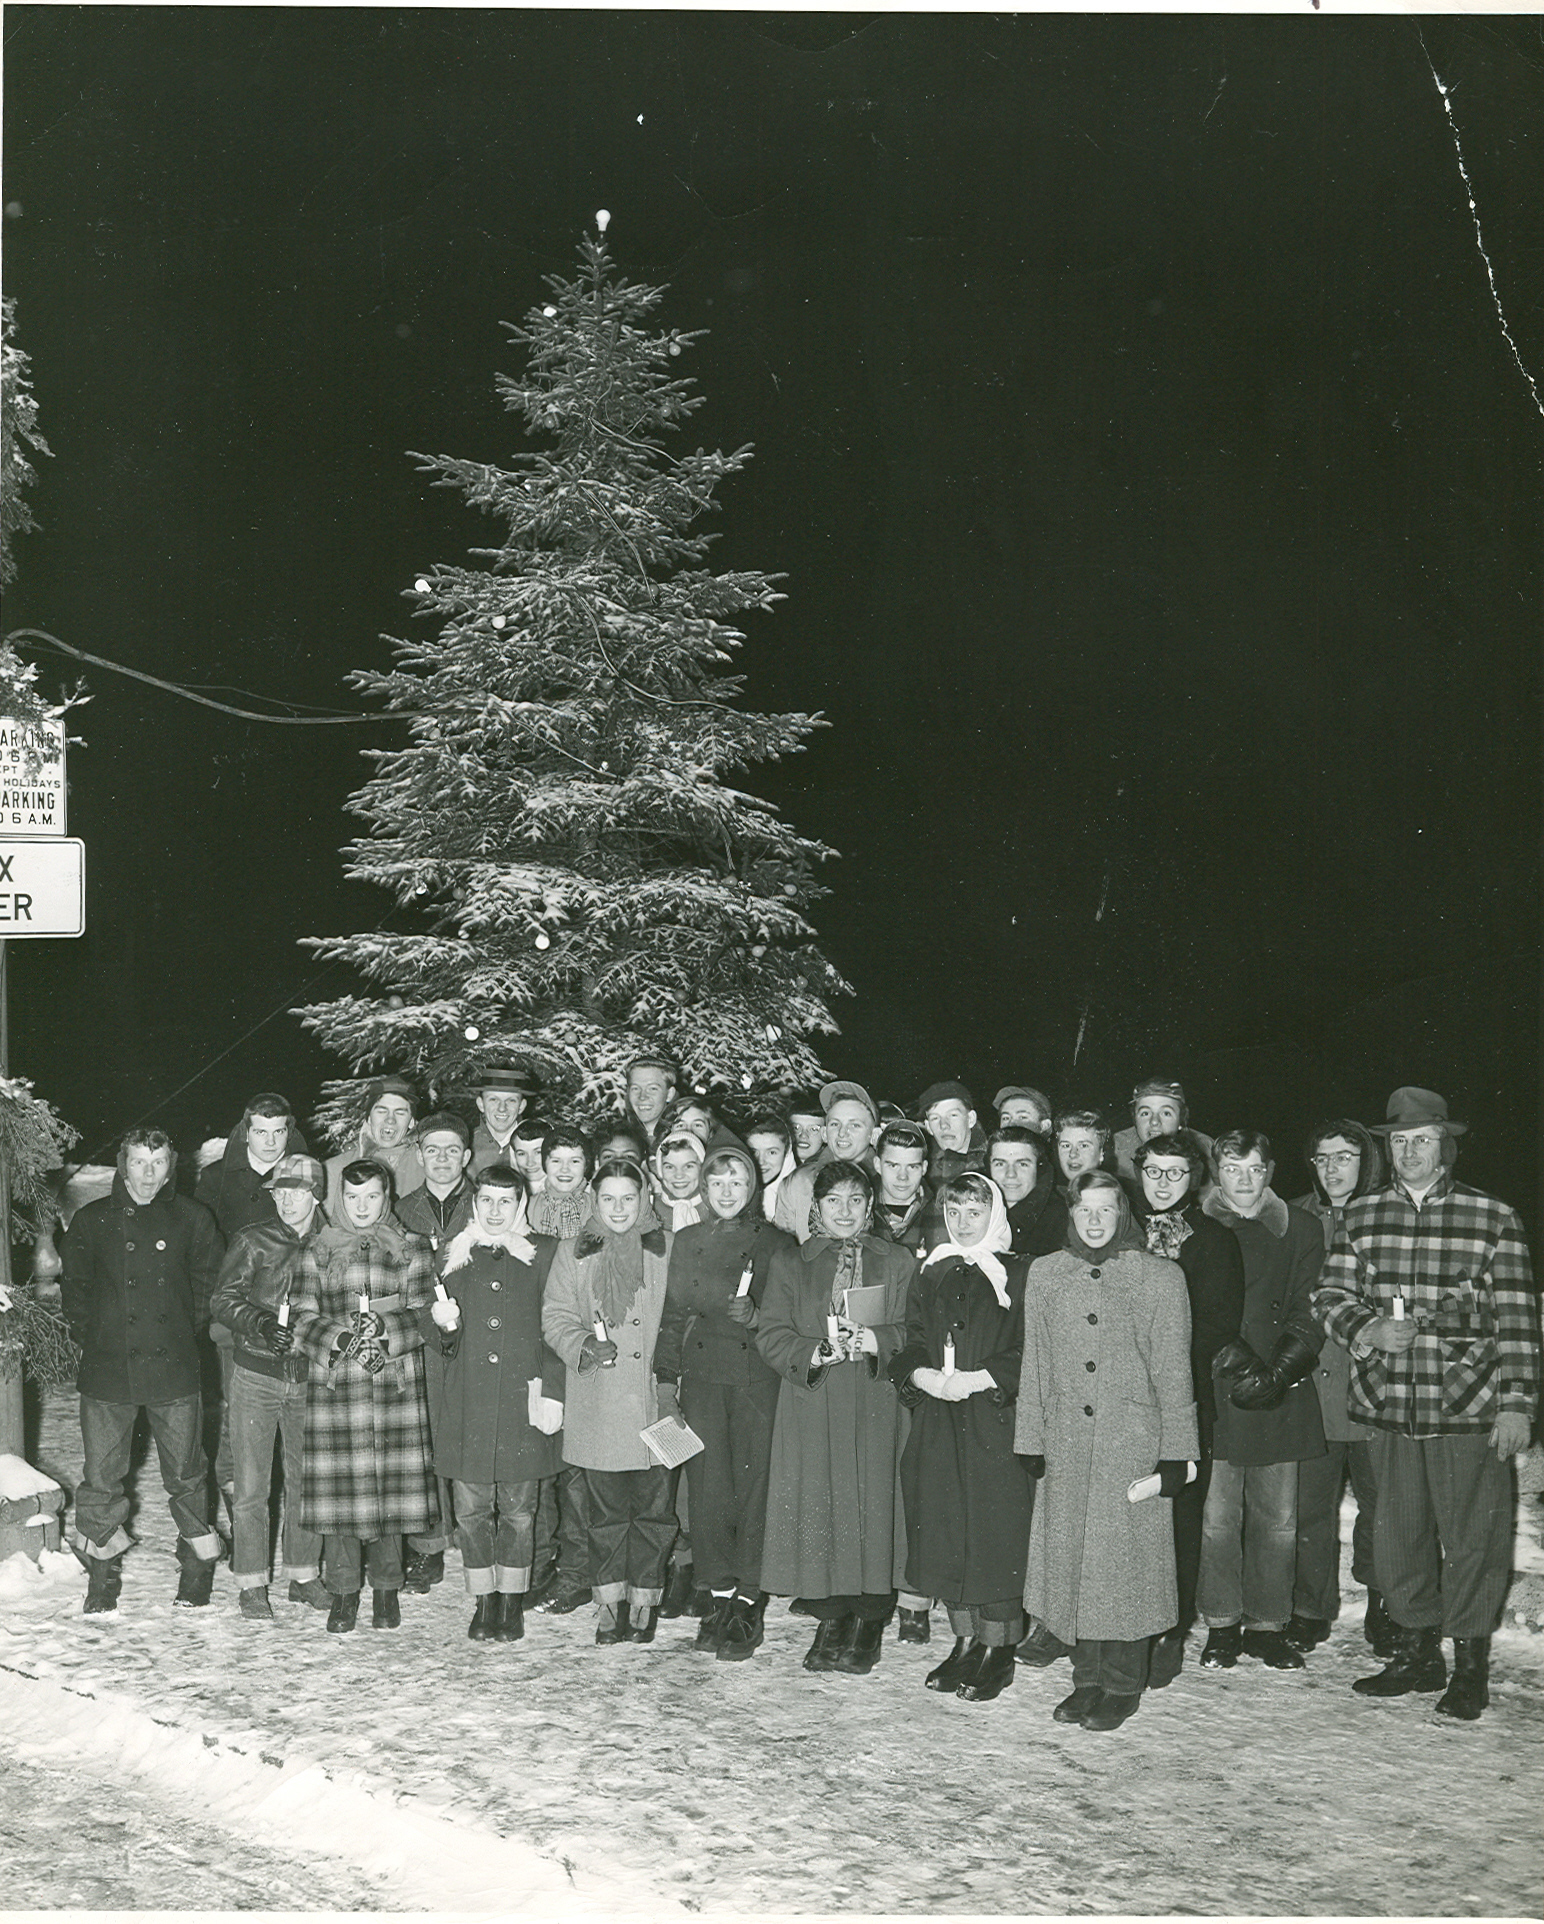 Christmas Caroling Near the Main Street Bridge, c. 1950s